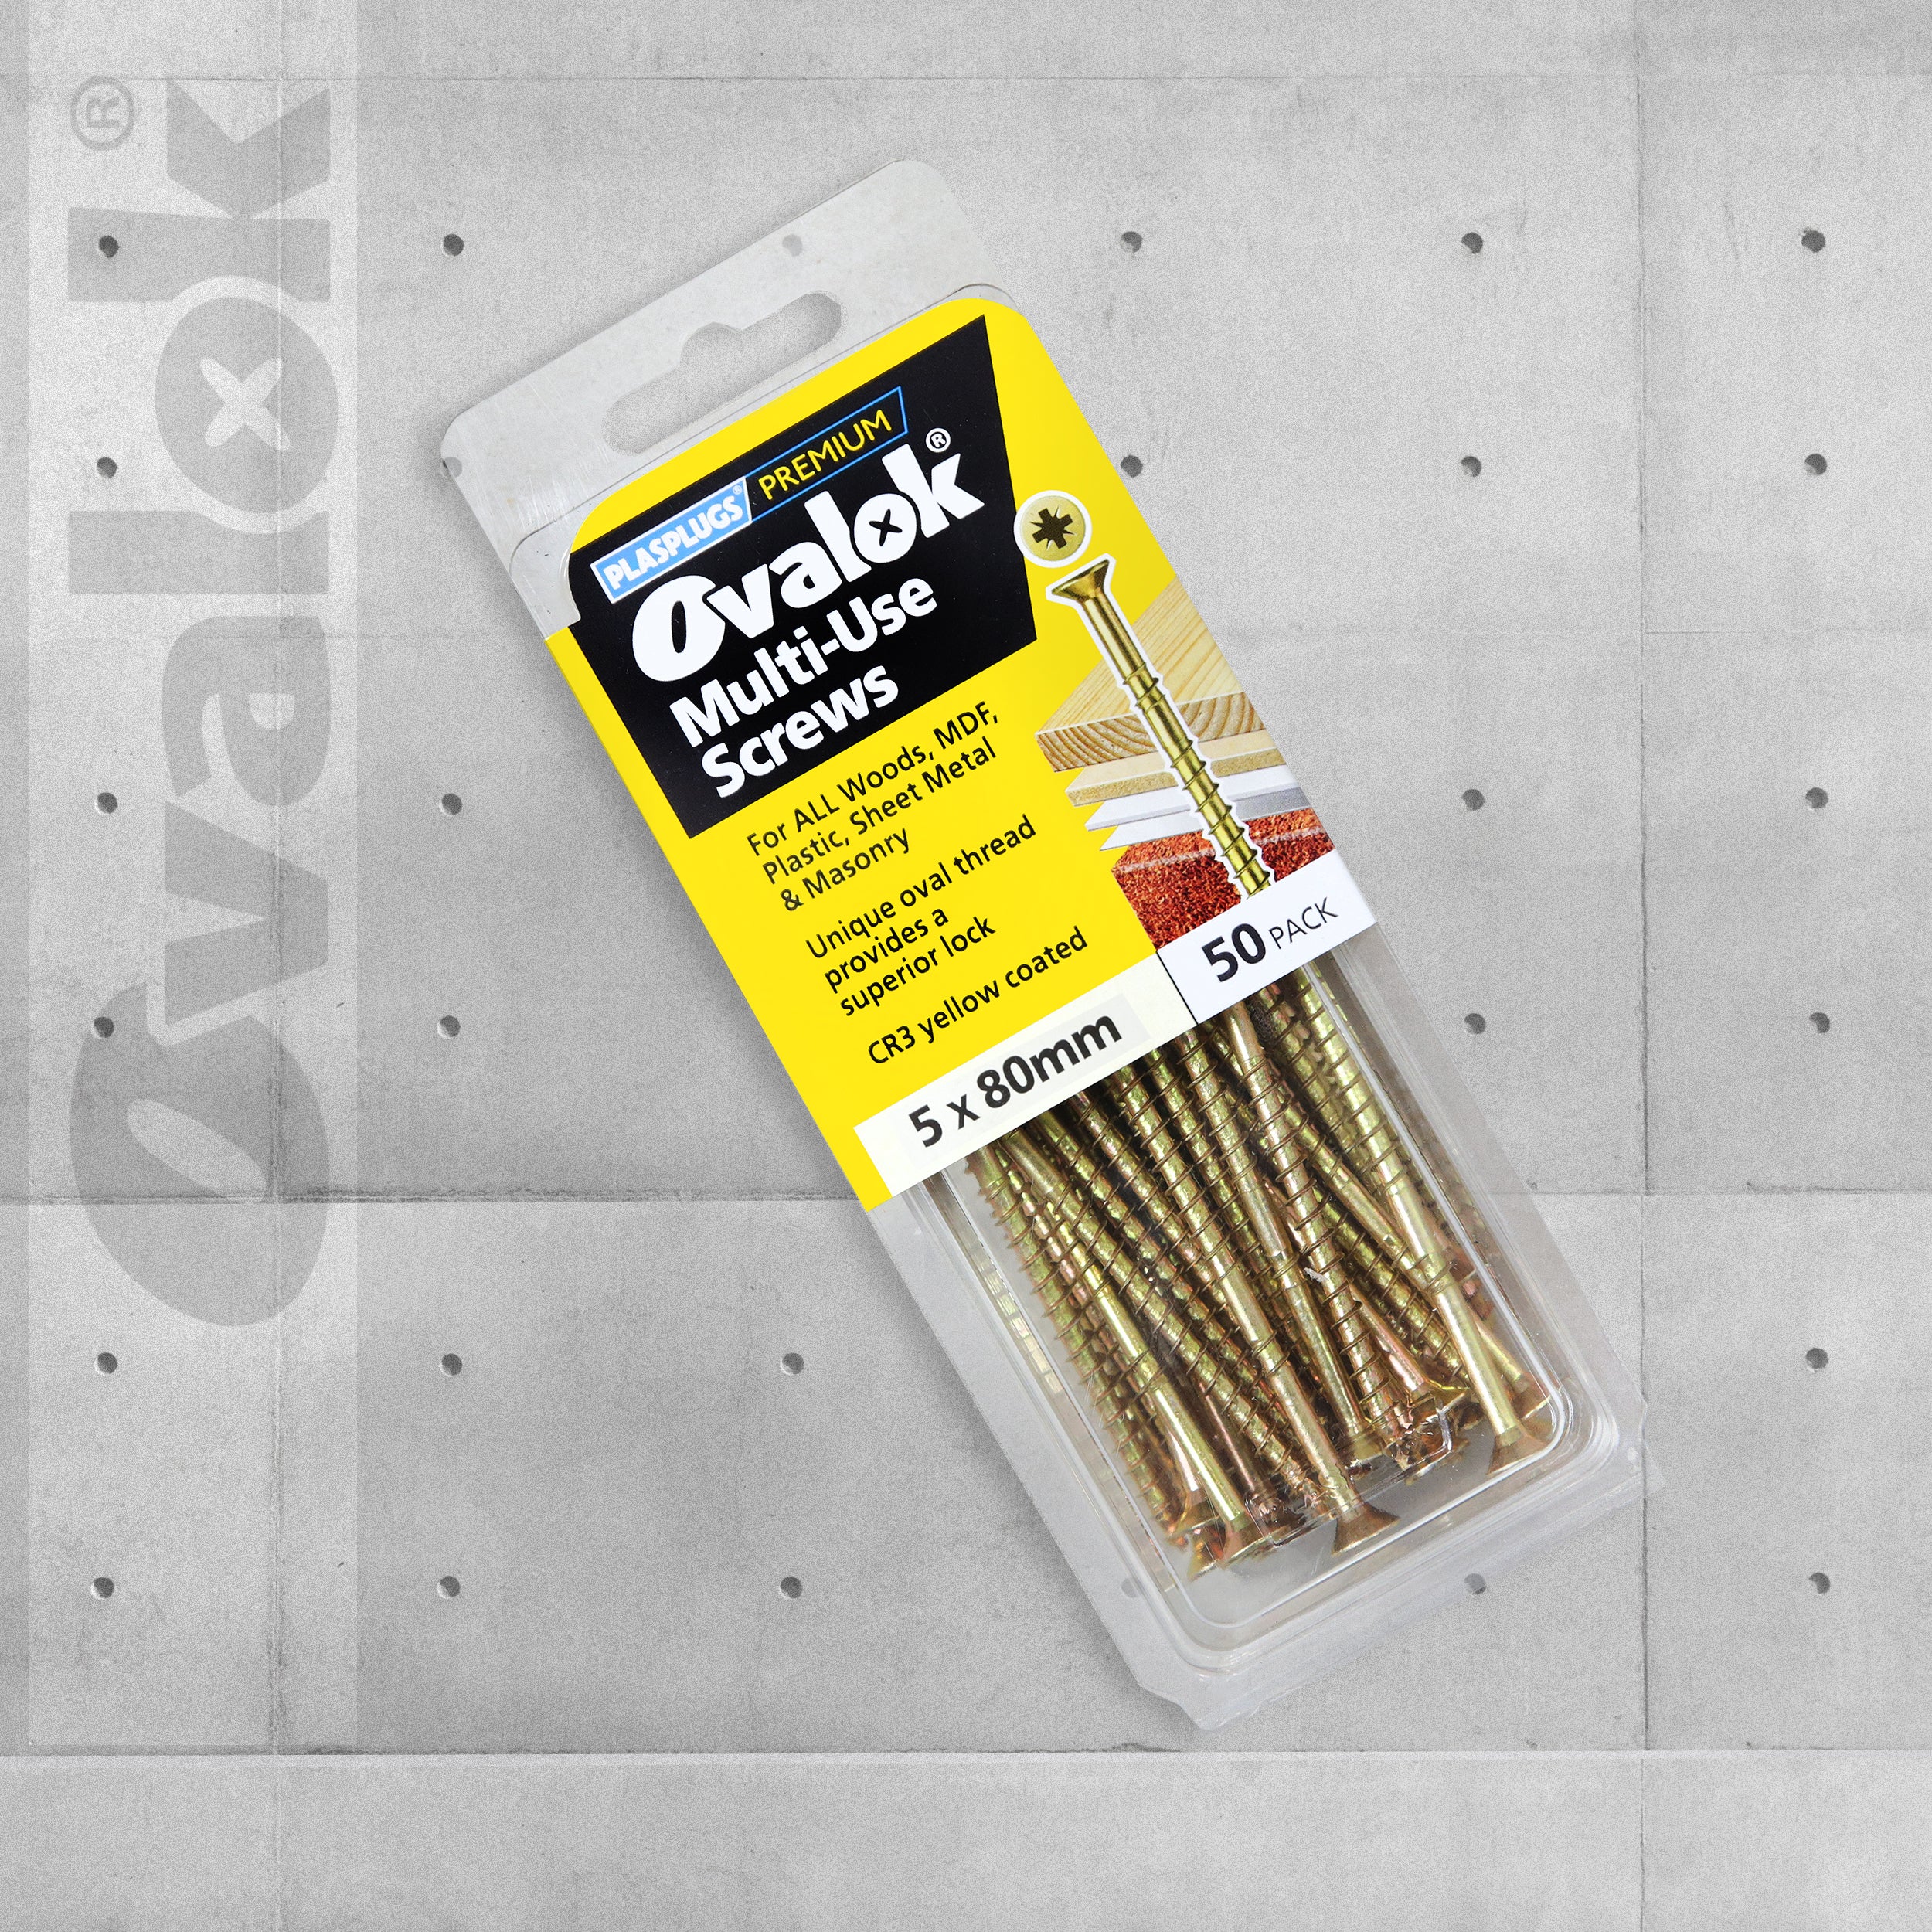 Plasplugs Ovalok Traditional Multi Purpose Screws 5.0 x 80mm - Pack of 50